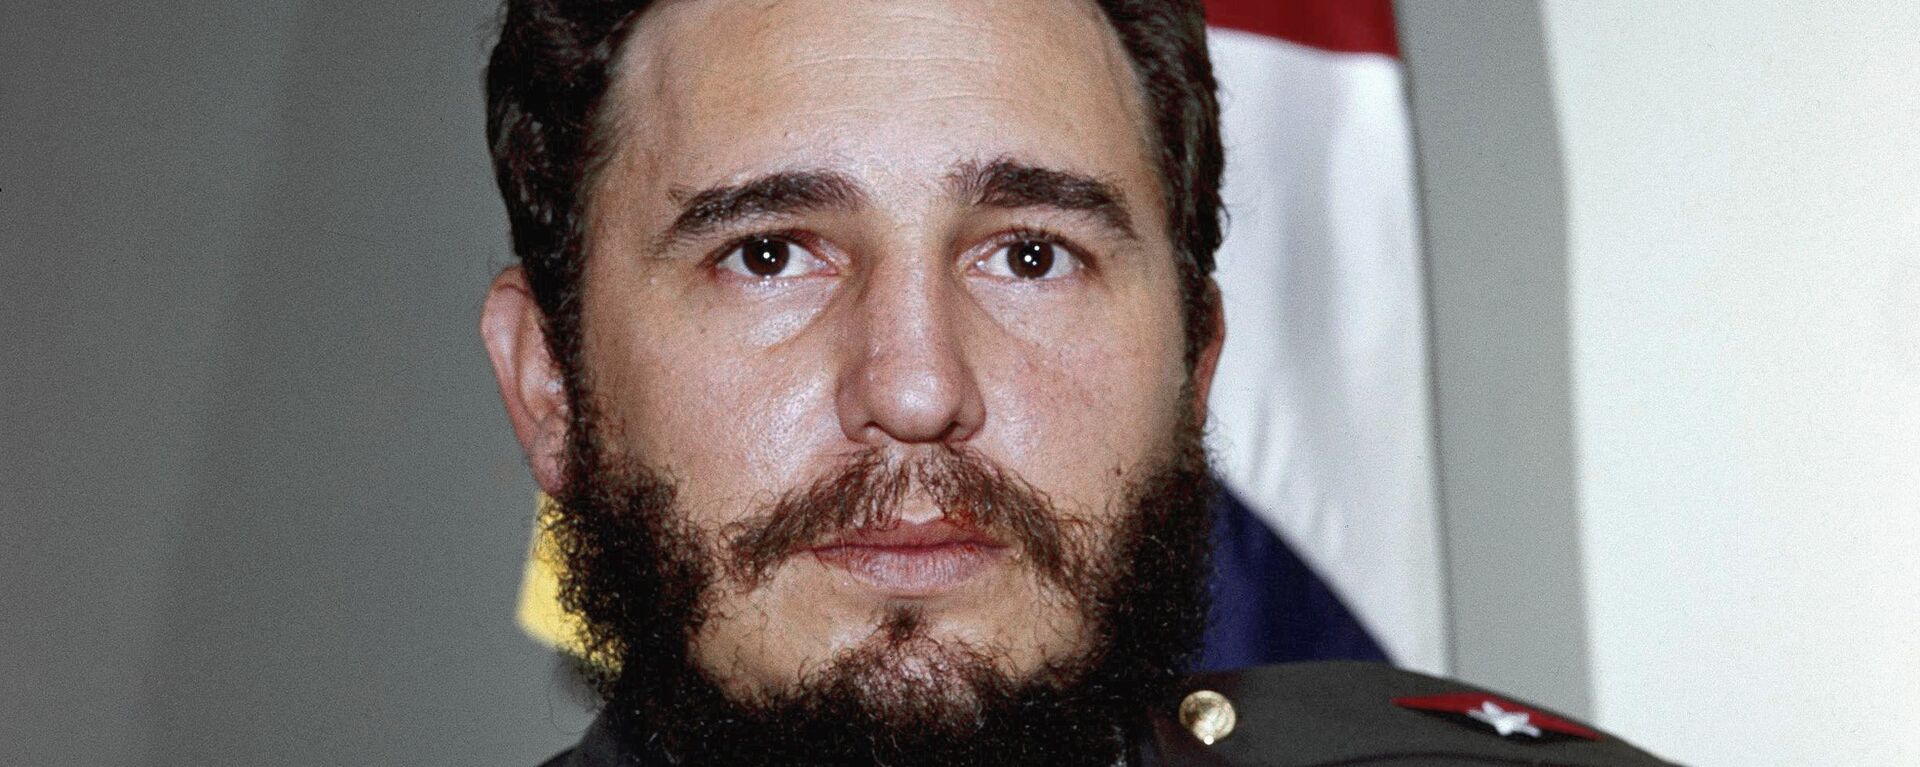 Fidel Castro, lider cubano - Sputnik Mundo, 1920, 13.08.2021